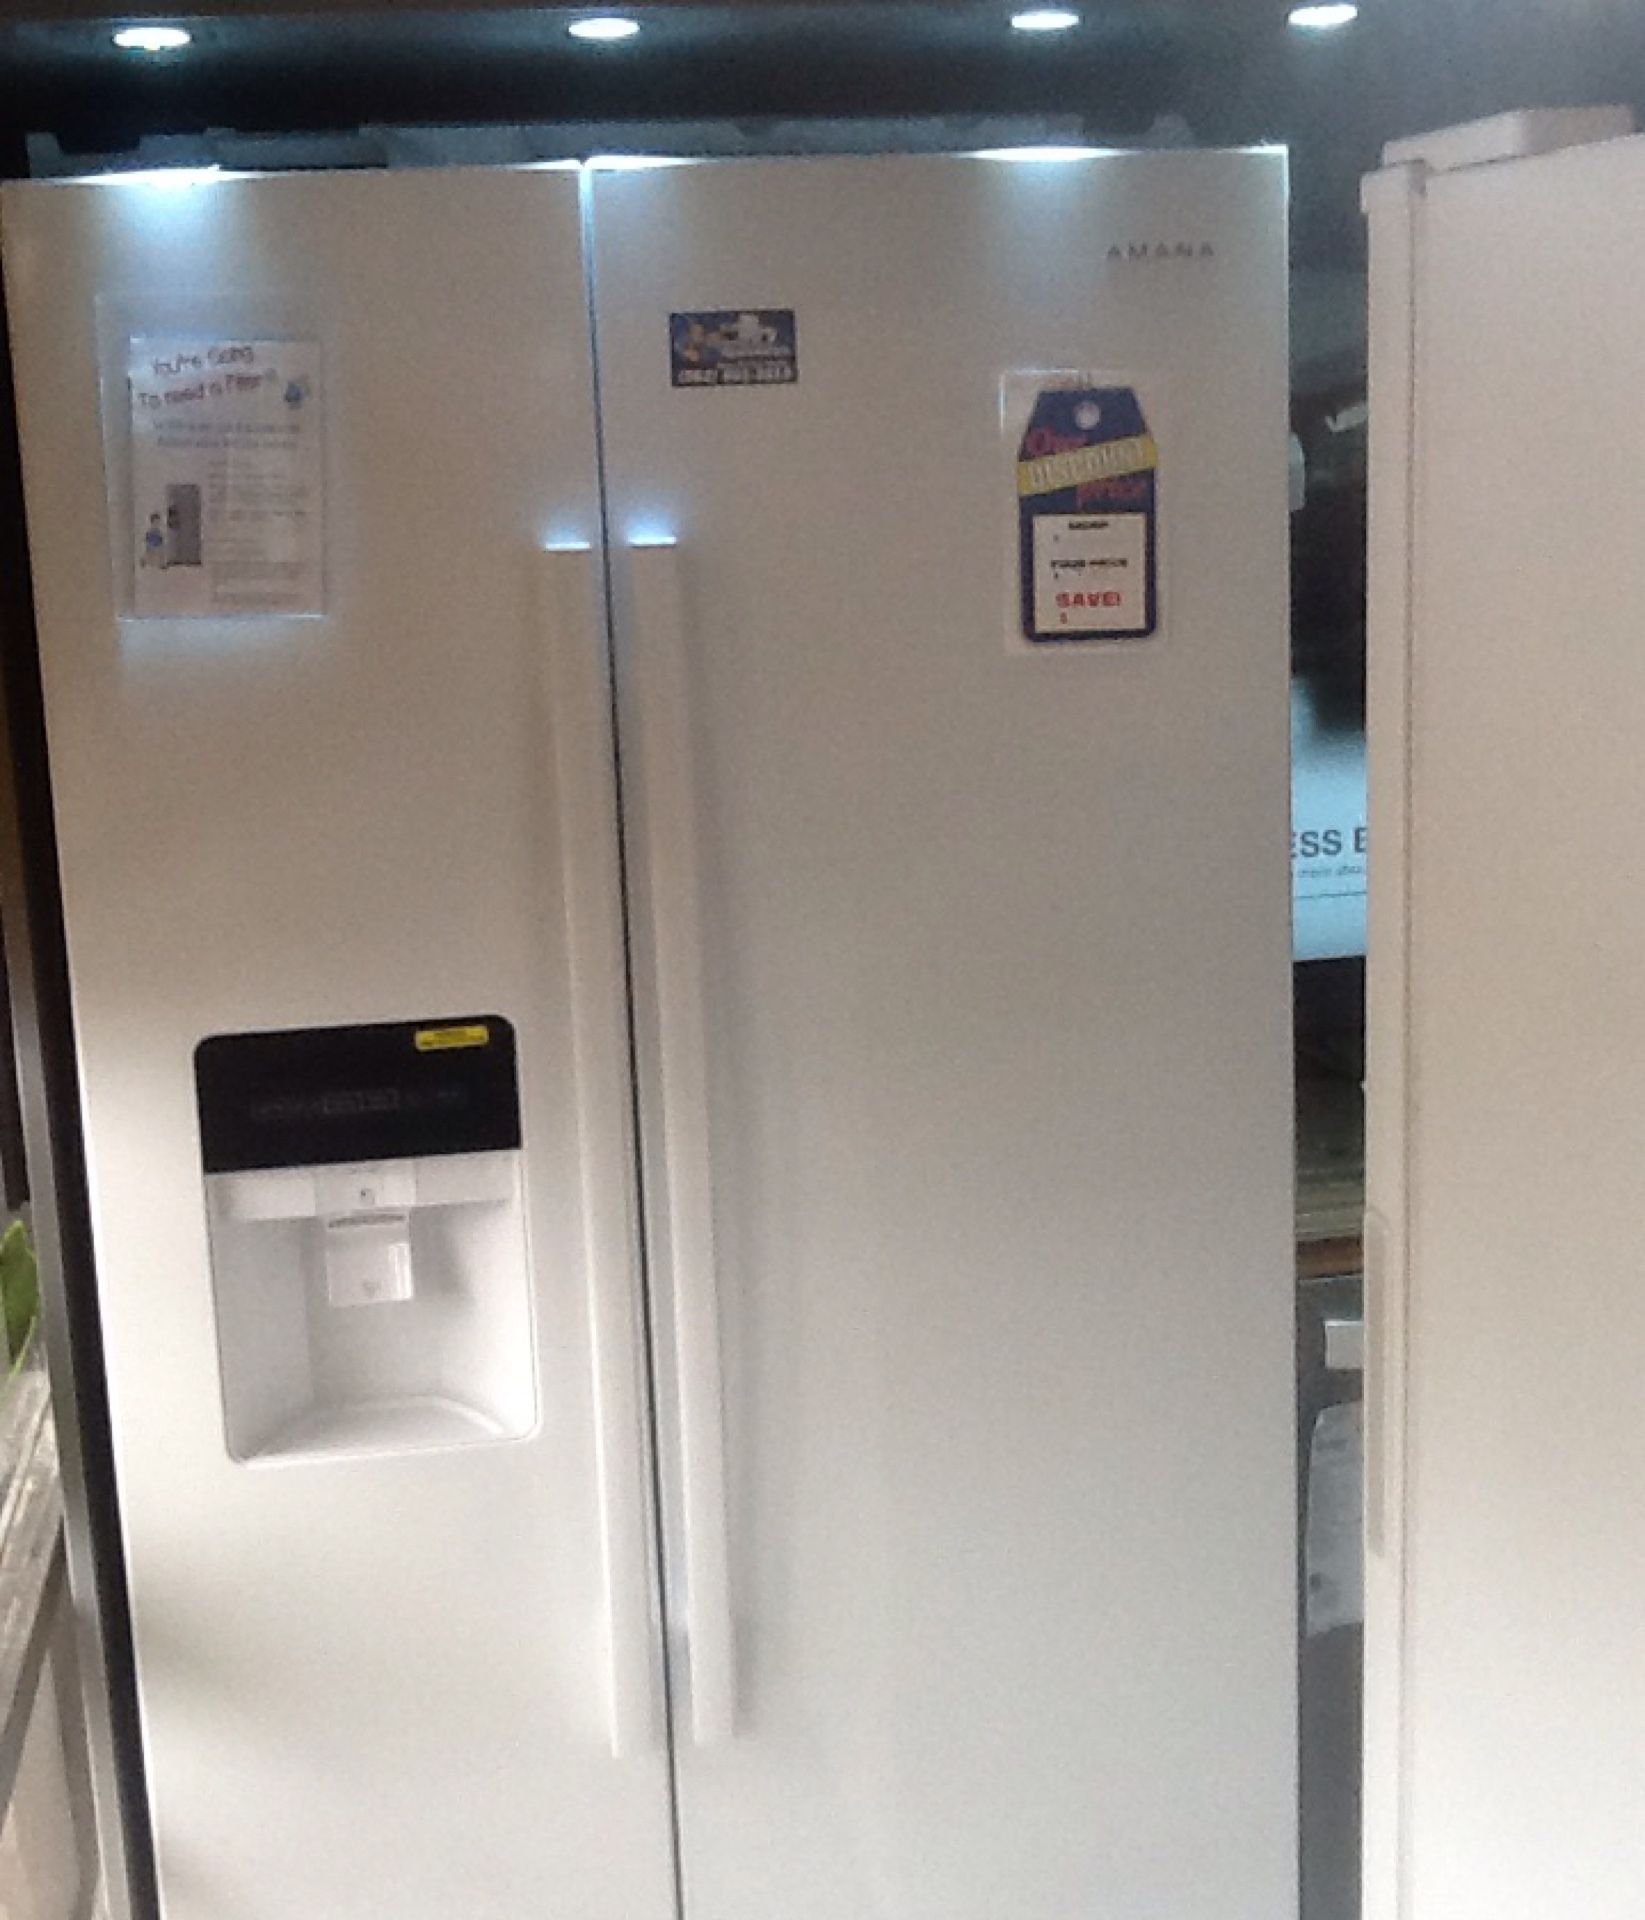 New open box Amana refrigerator ASI2575GRW